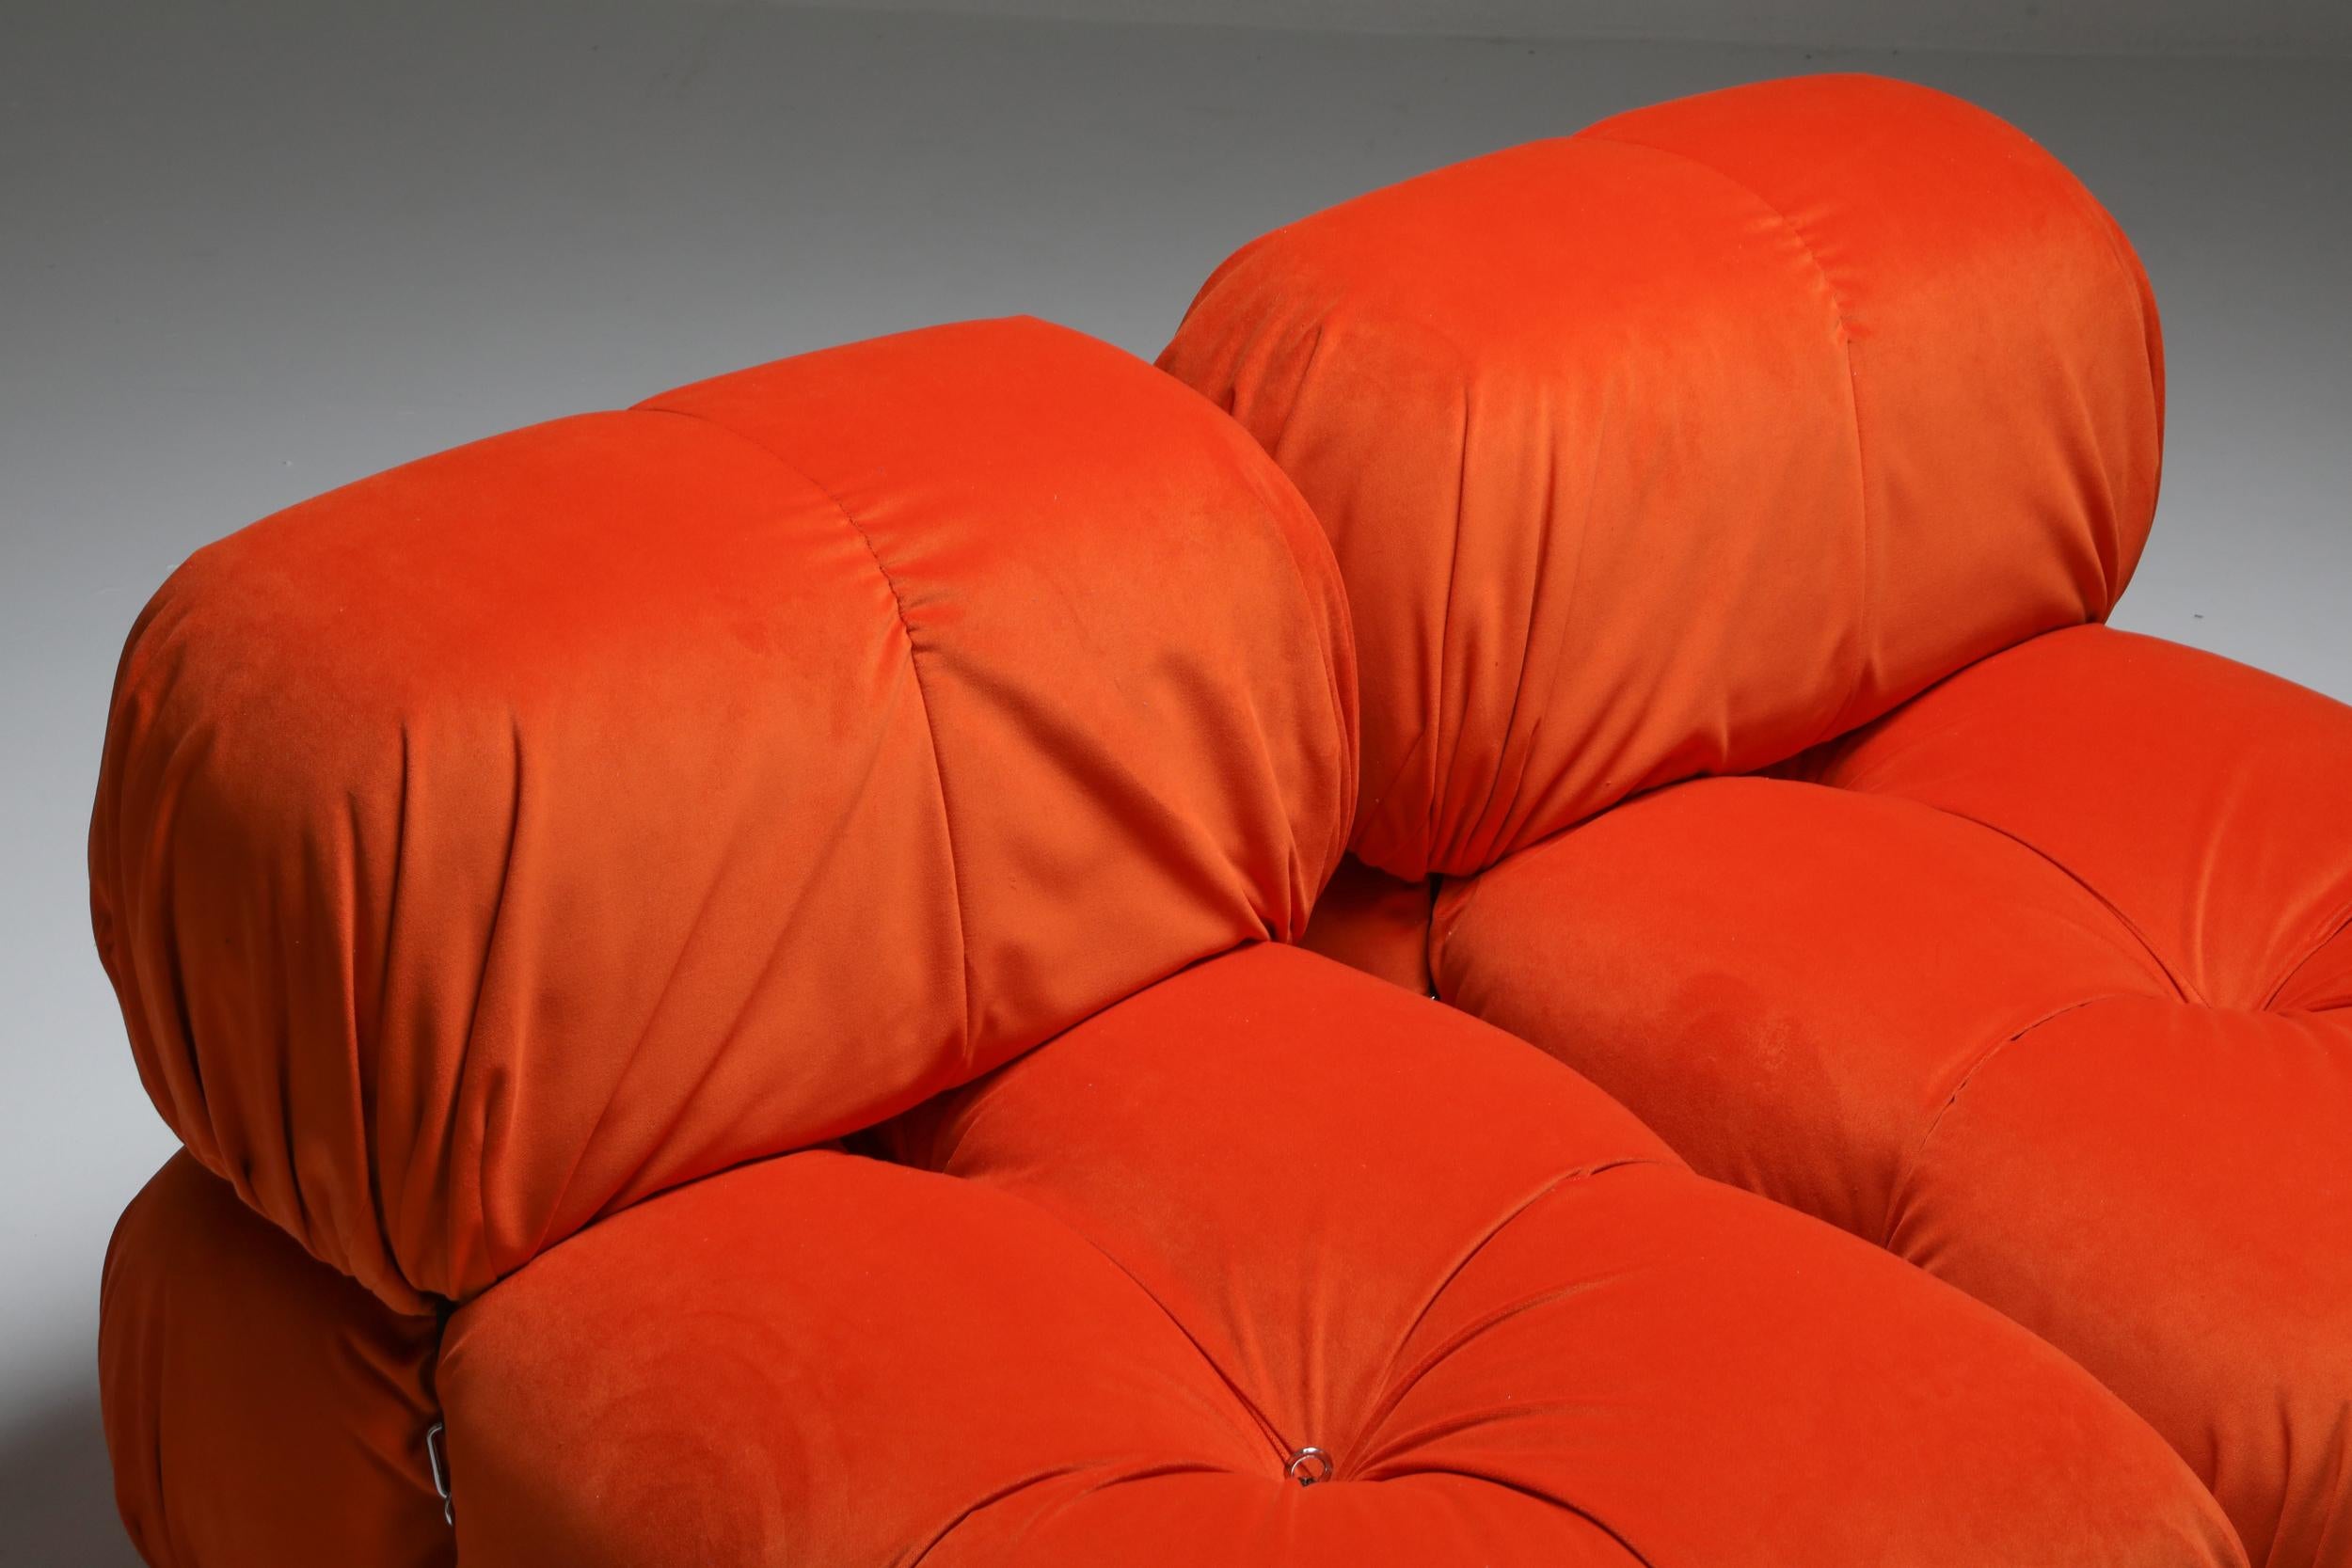 20th Century Camaleonda Lounge Chairs in Bright Orange Velvet